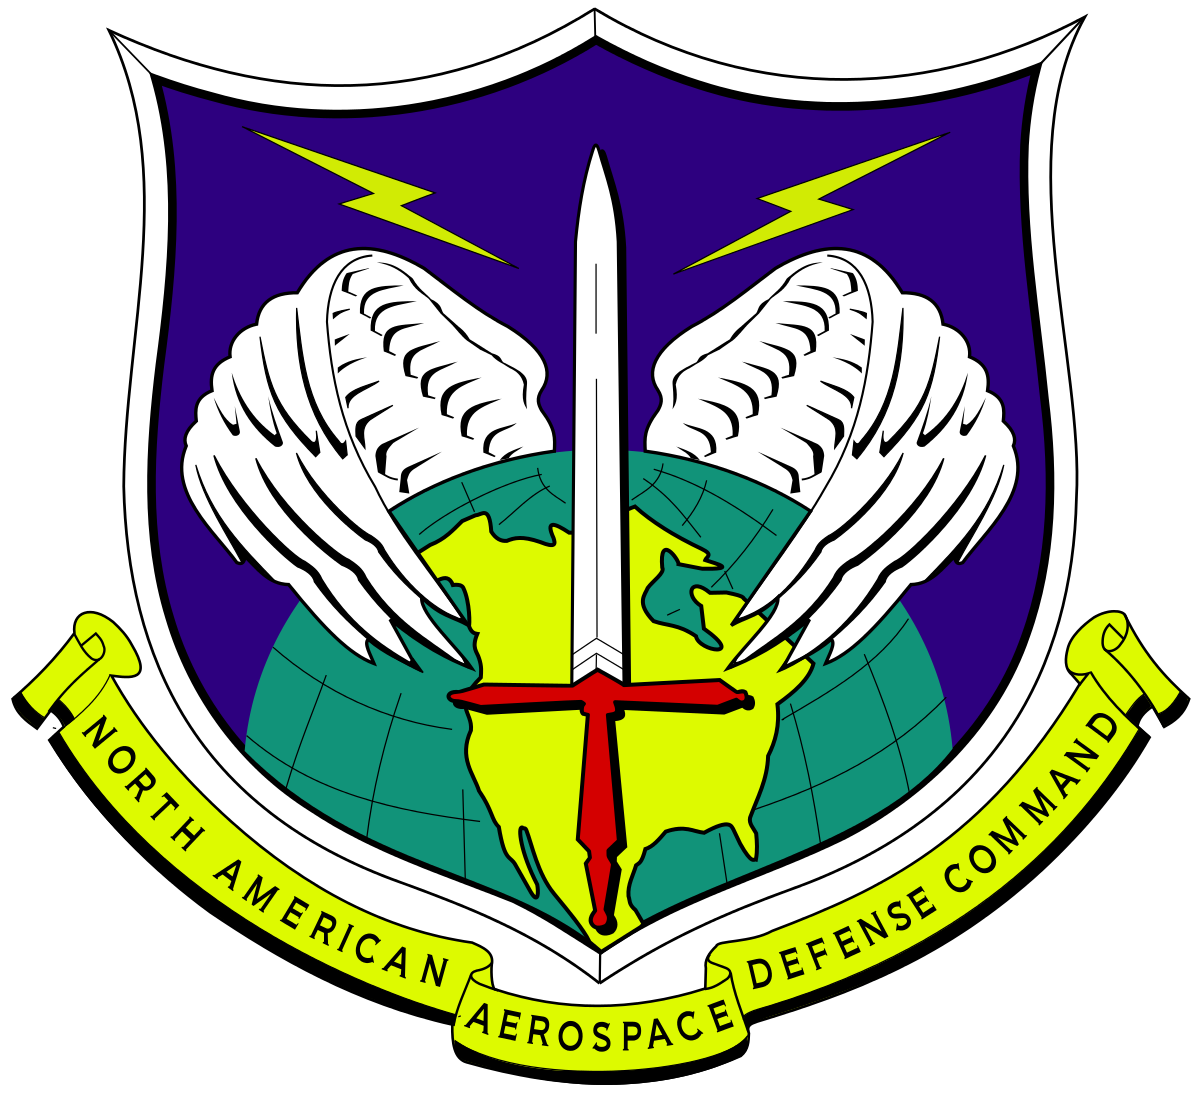 https://0201.nccdn.net/1_2/000/000/0b6/1a4/1200px-north_american_aerospace_defense_command_logo.svg.png